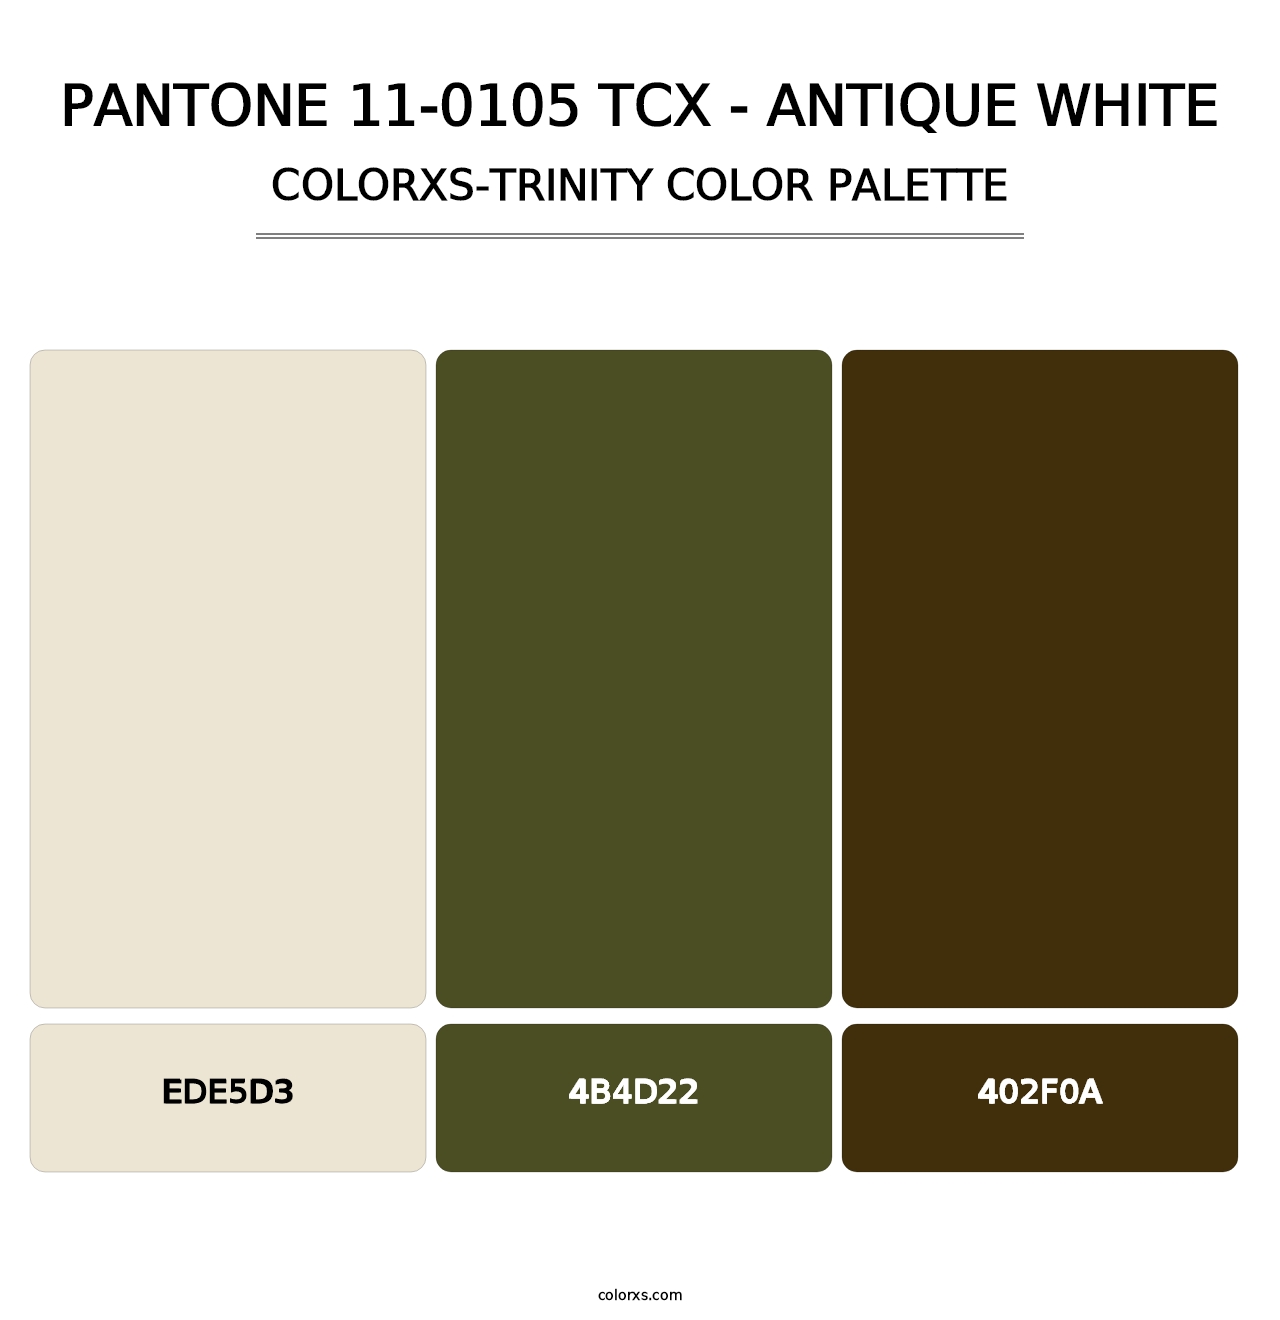 PANTONE 11-0105 TCX - Antique White - Colorxs Trinity Palette